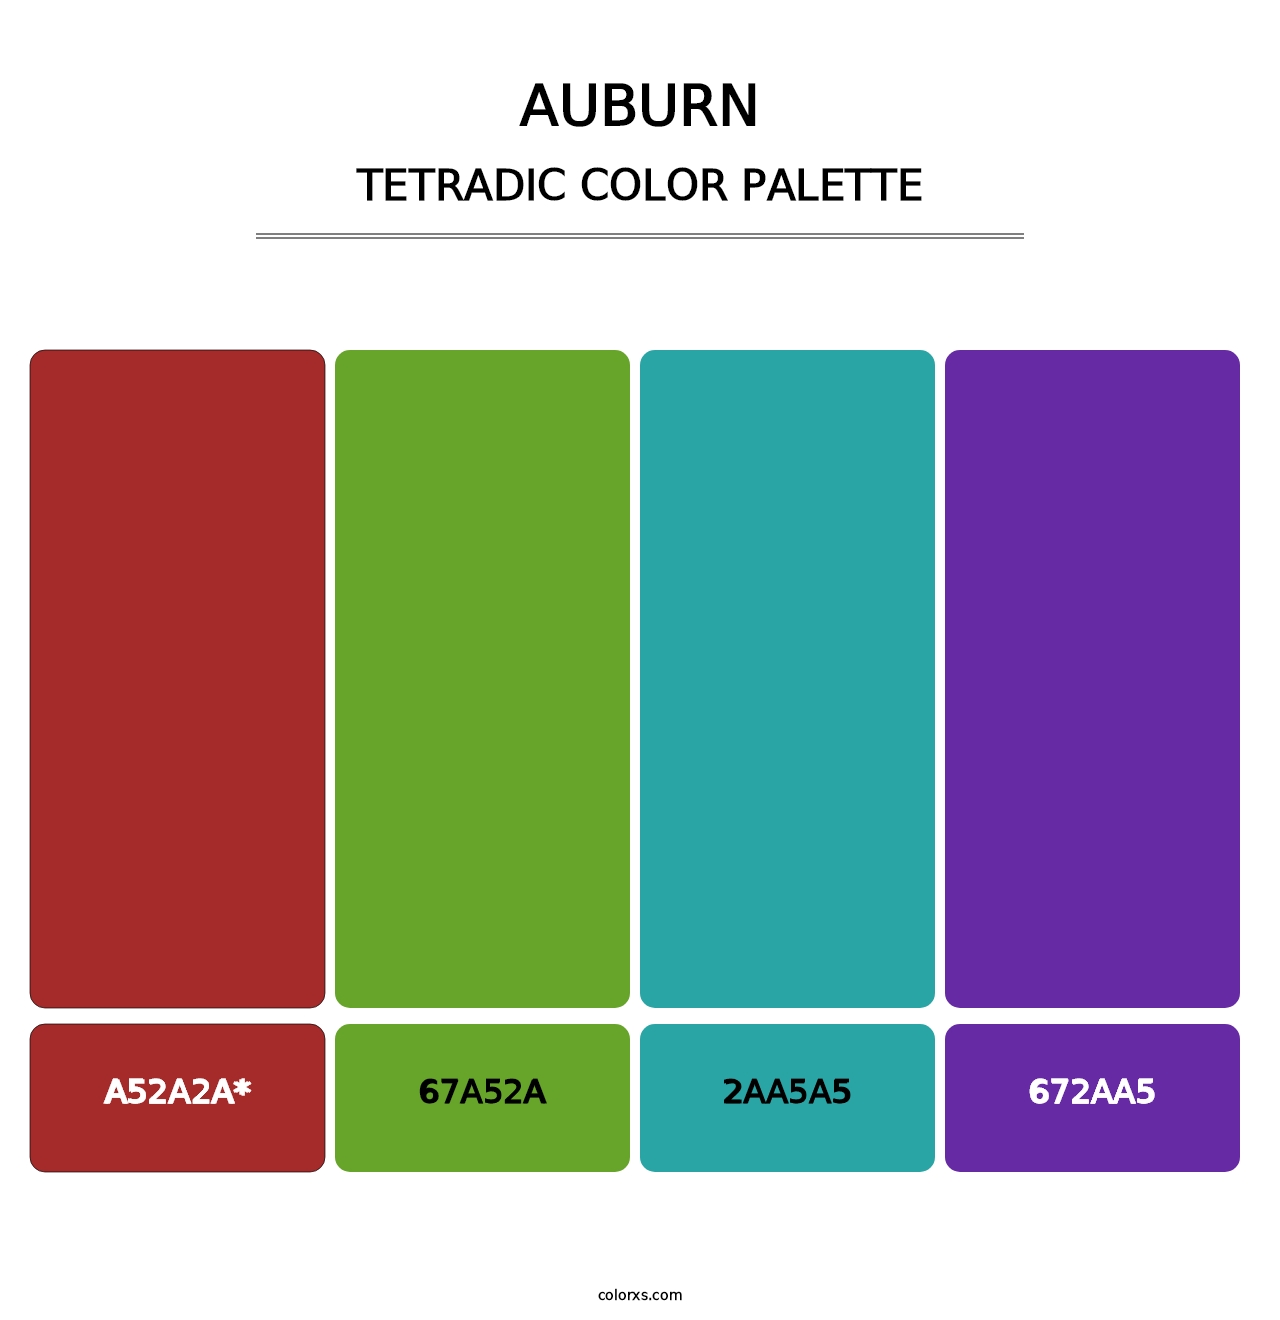 Auburn - Tetradic Color Palette